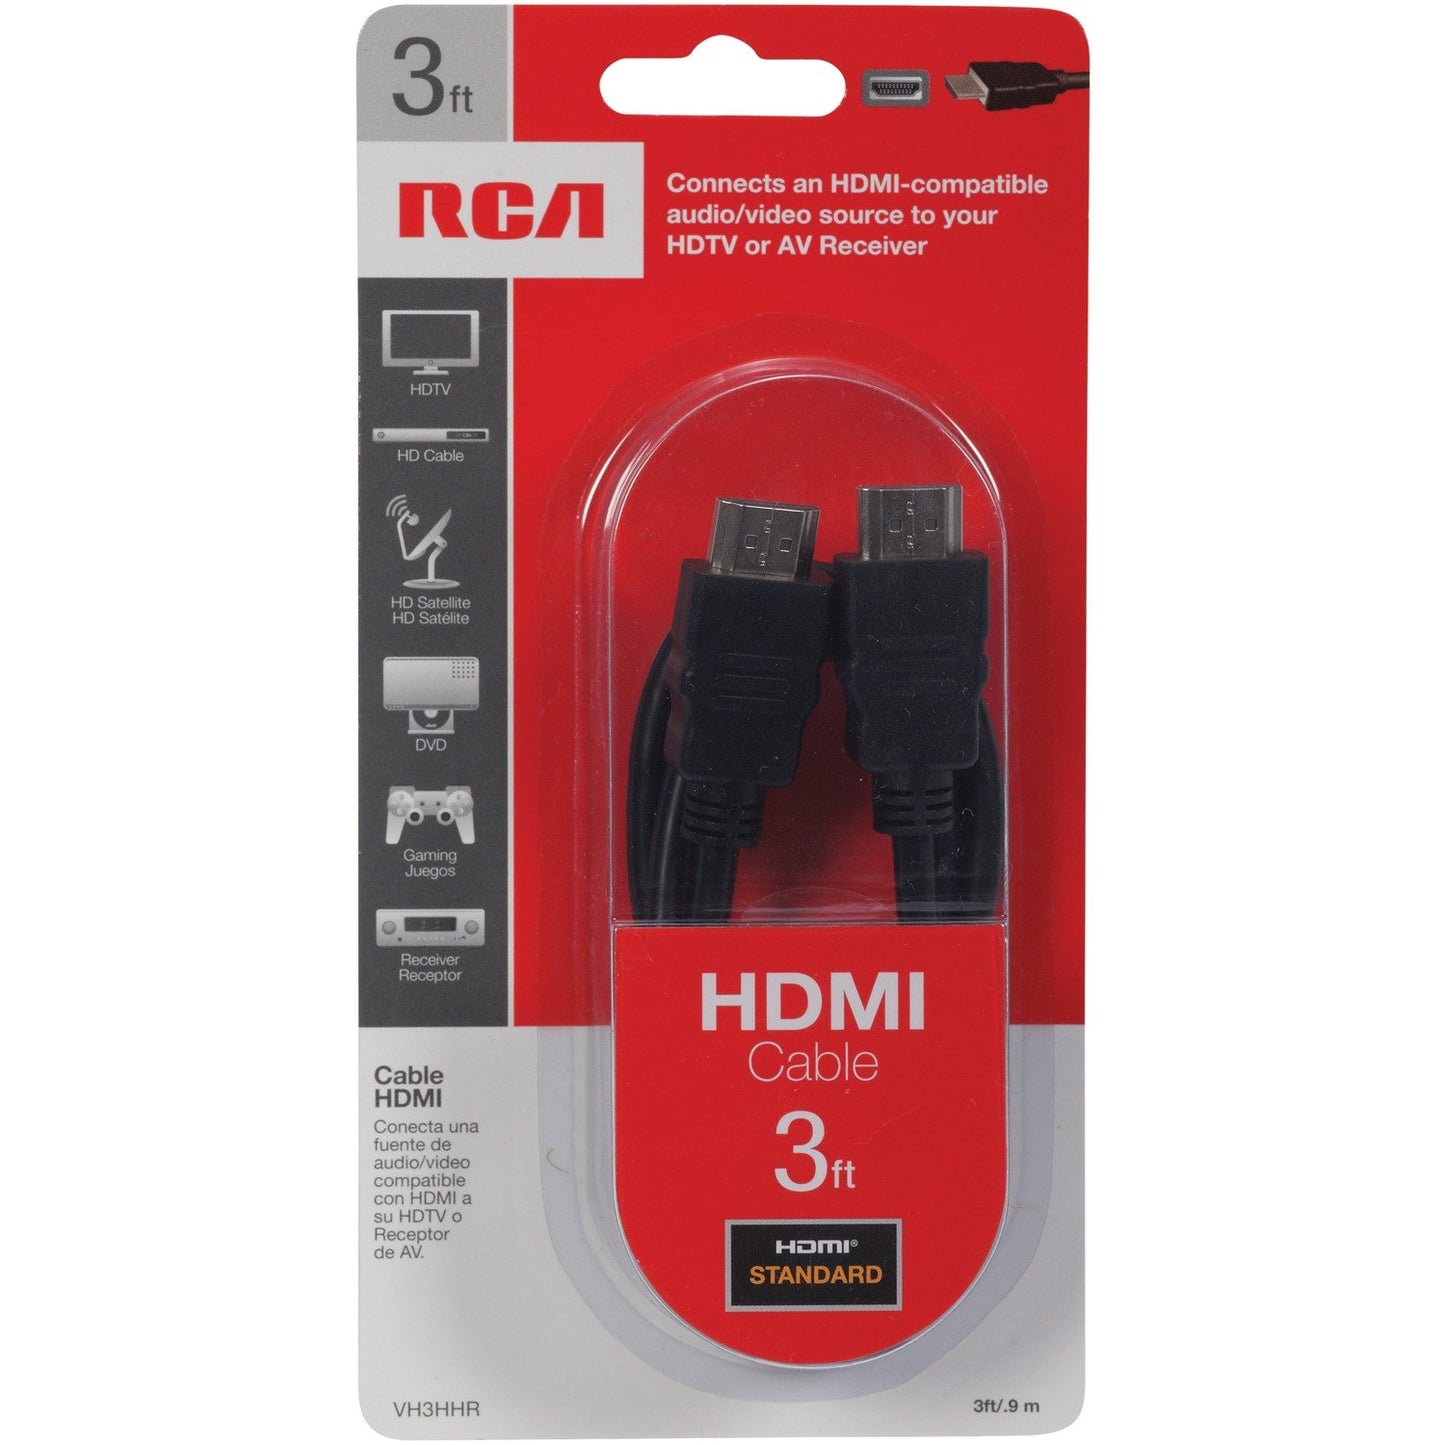 RCA VH3HHR Standard HDMI Cable, 3ft